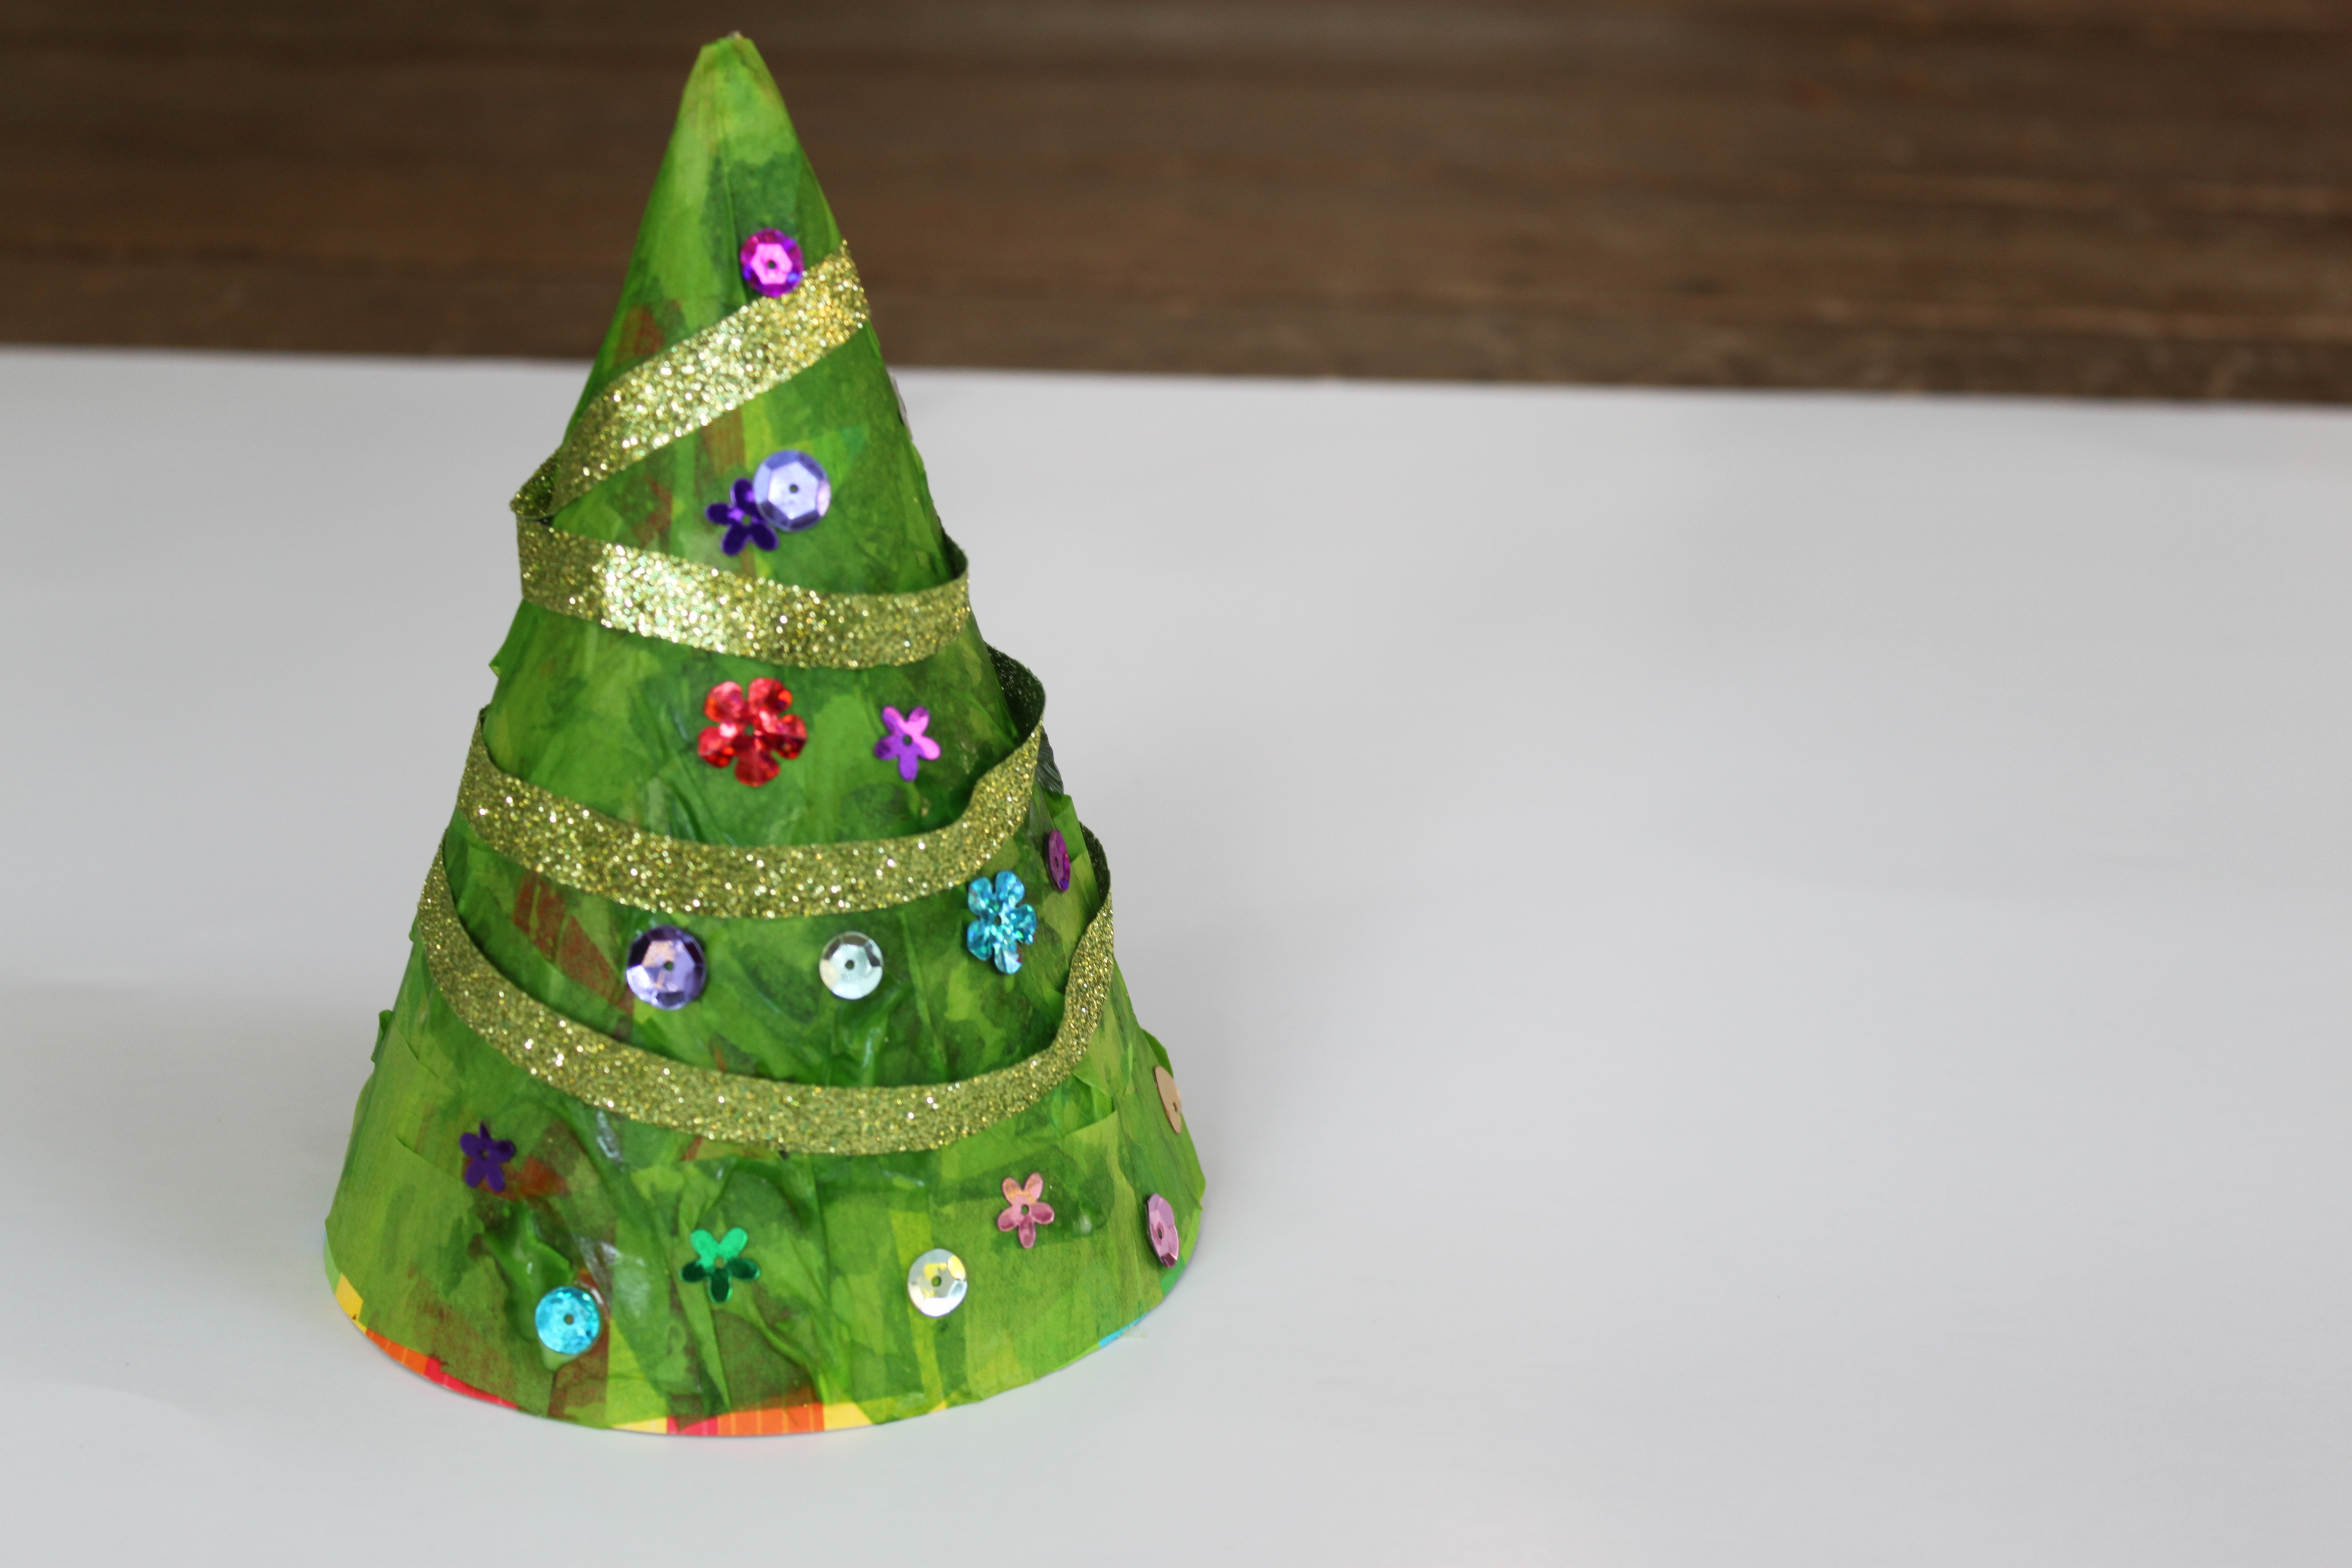 Foam Christmas Trees, DIY for Beginners